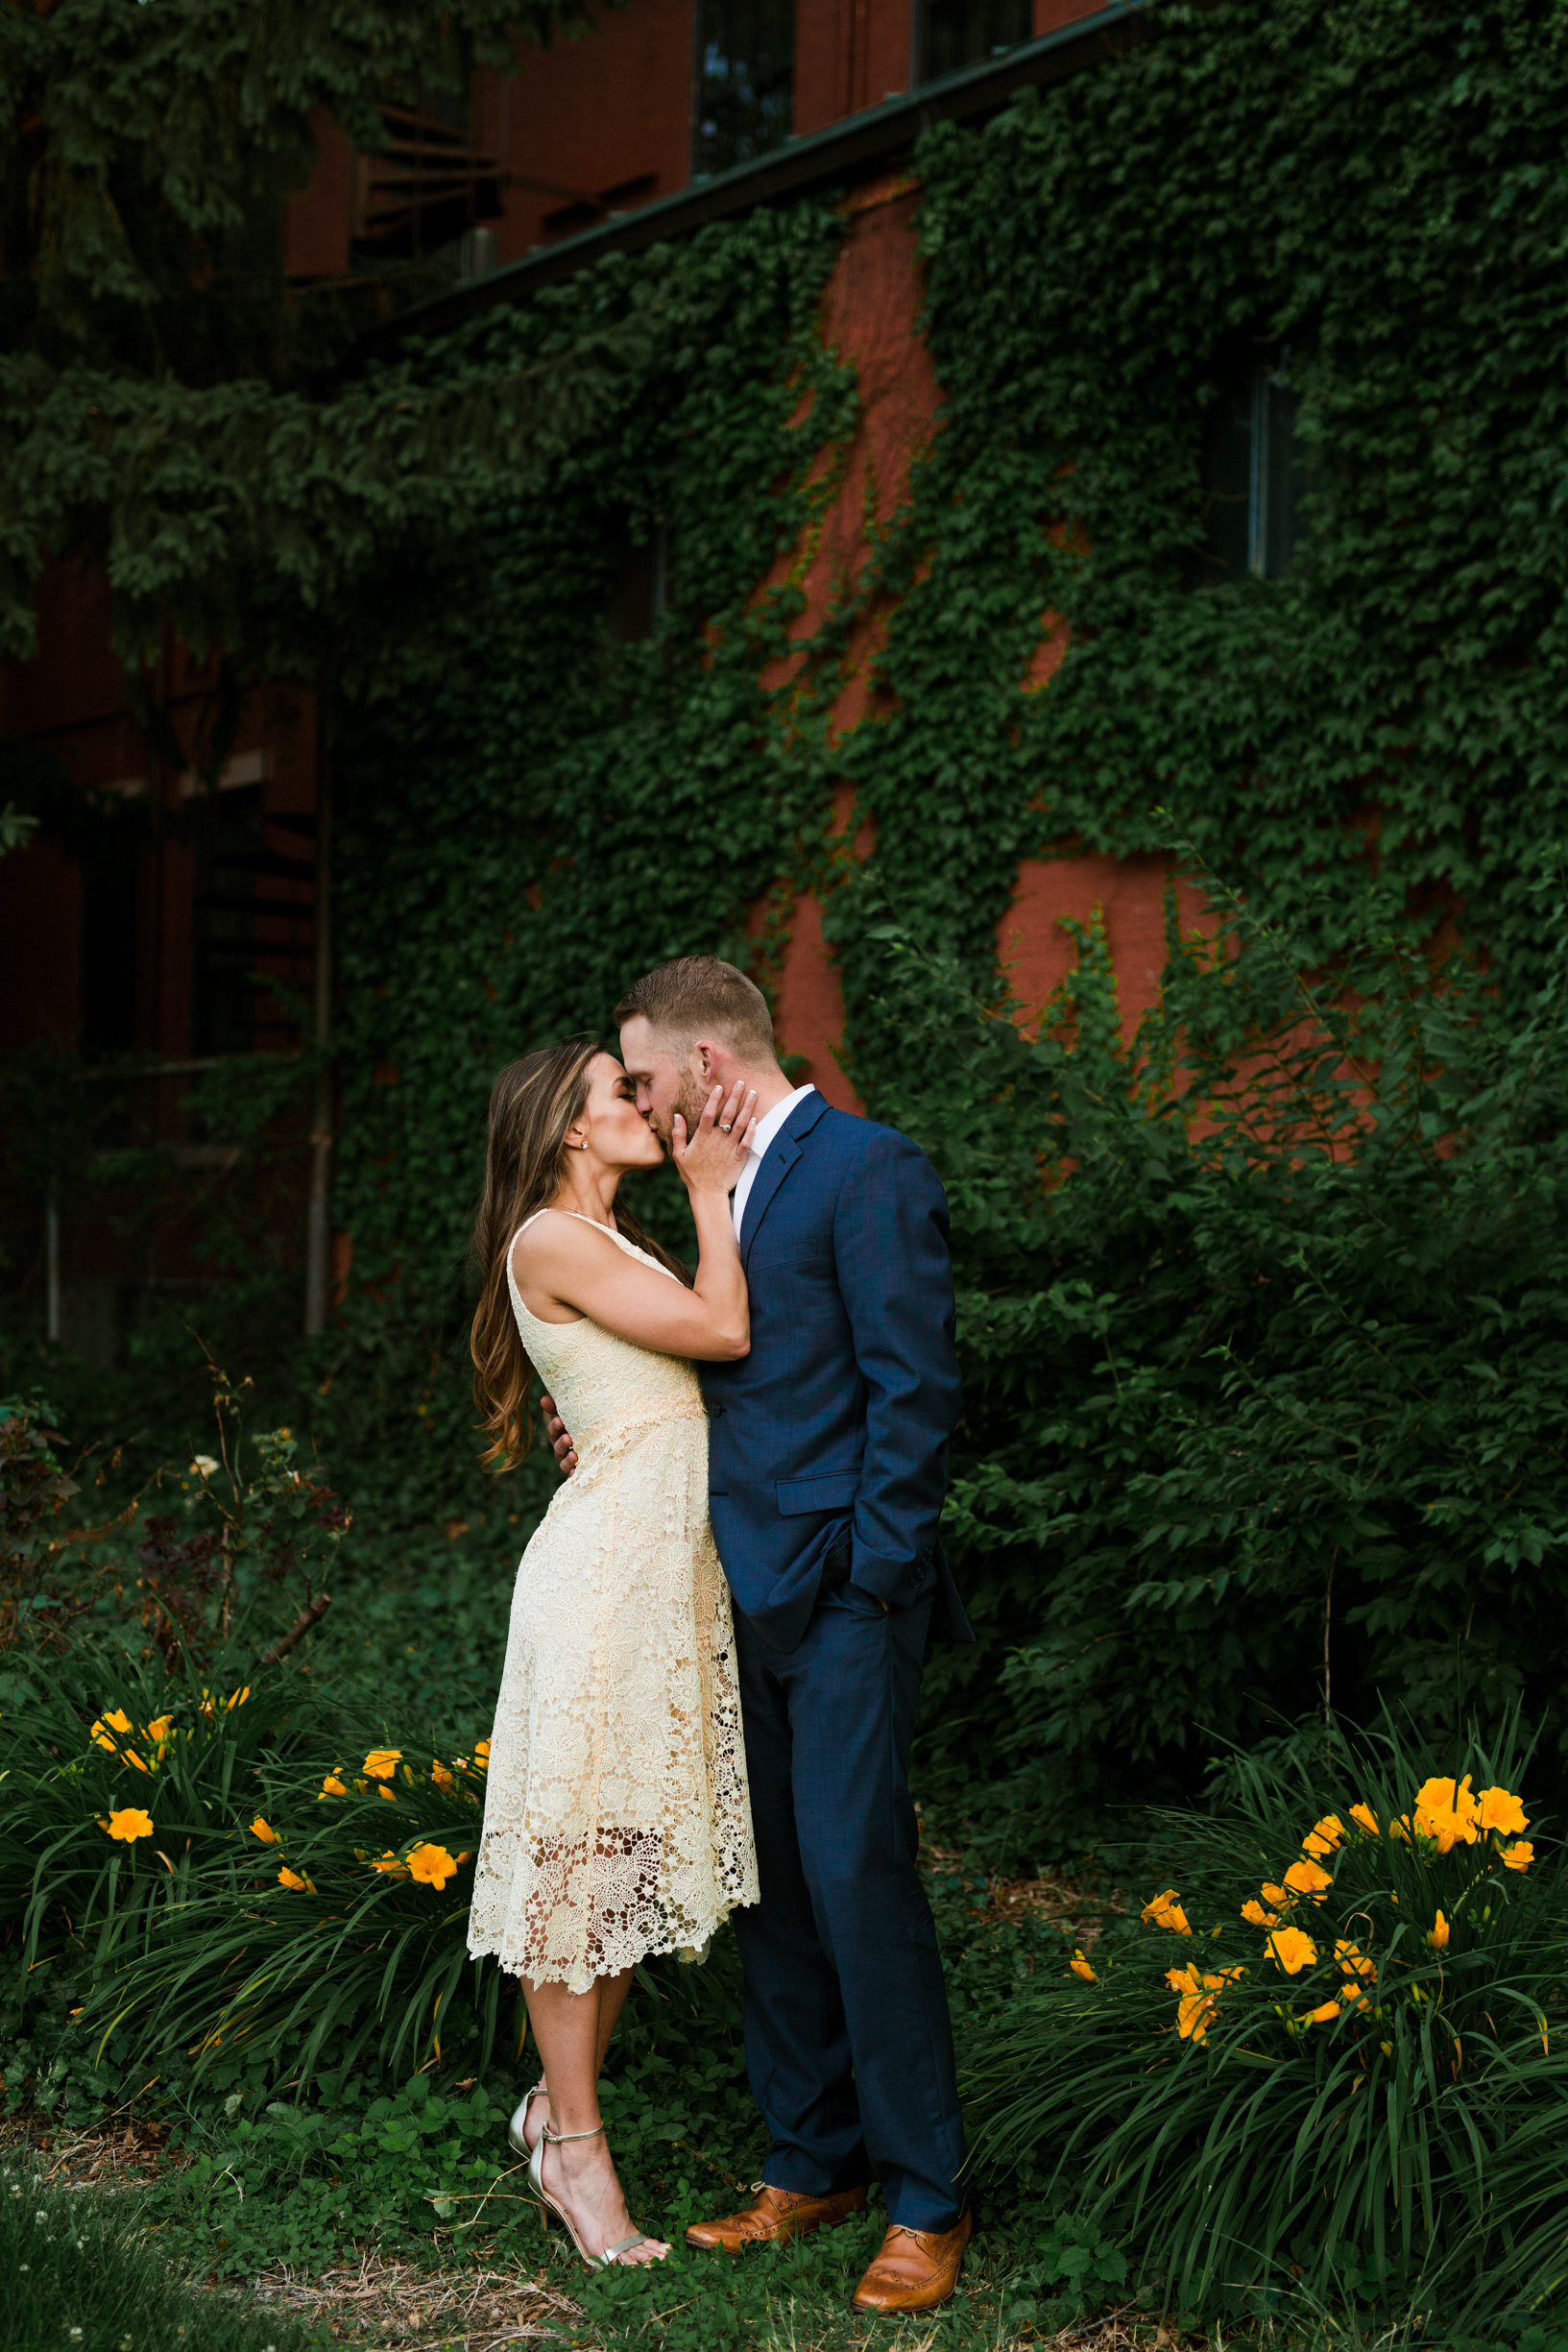 Victoria & Chad Engagement 2018 Crystal Ludwick Photo Louisville Kentucky Wedding Photographer WEBSITE (32 of 48).jpg